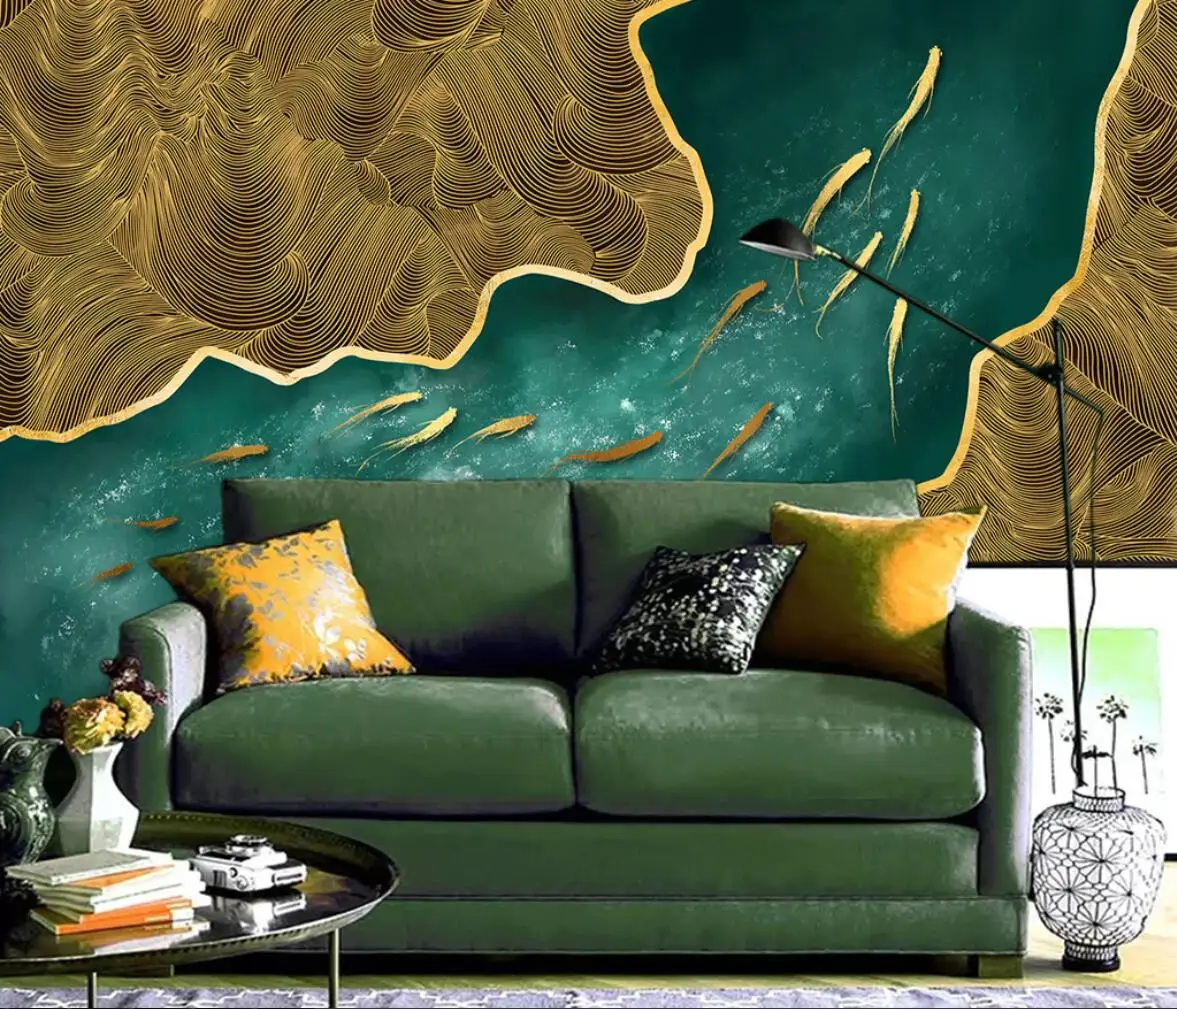 

custom wall papers home decor Abstract goldfish lines Wallpaper Mural Living Room TV Sofa Bedroom Papel De Parede 3D Stickers